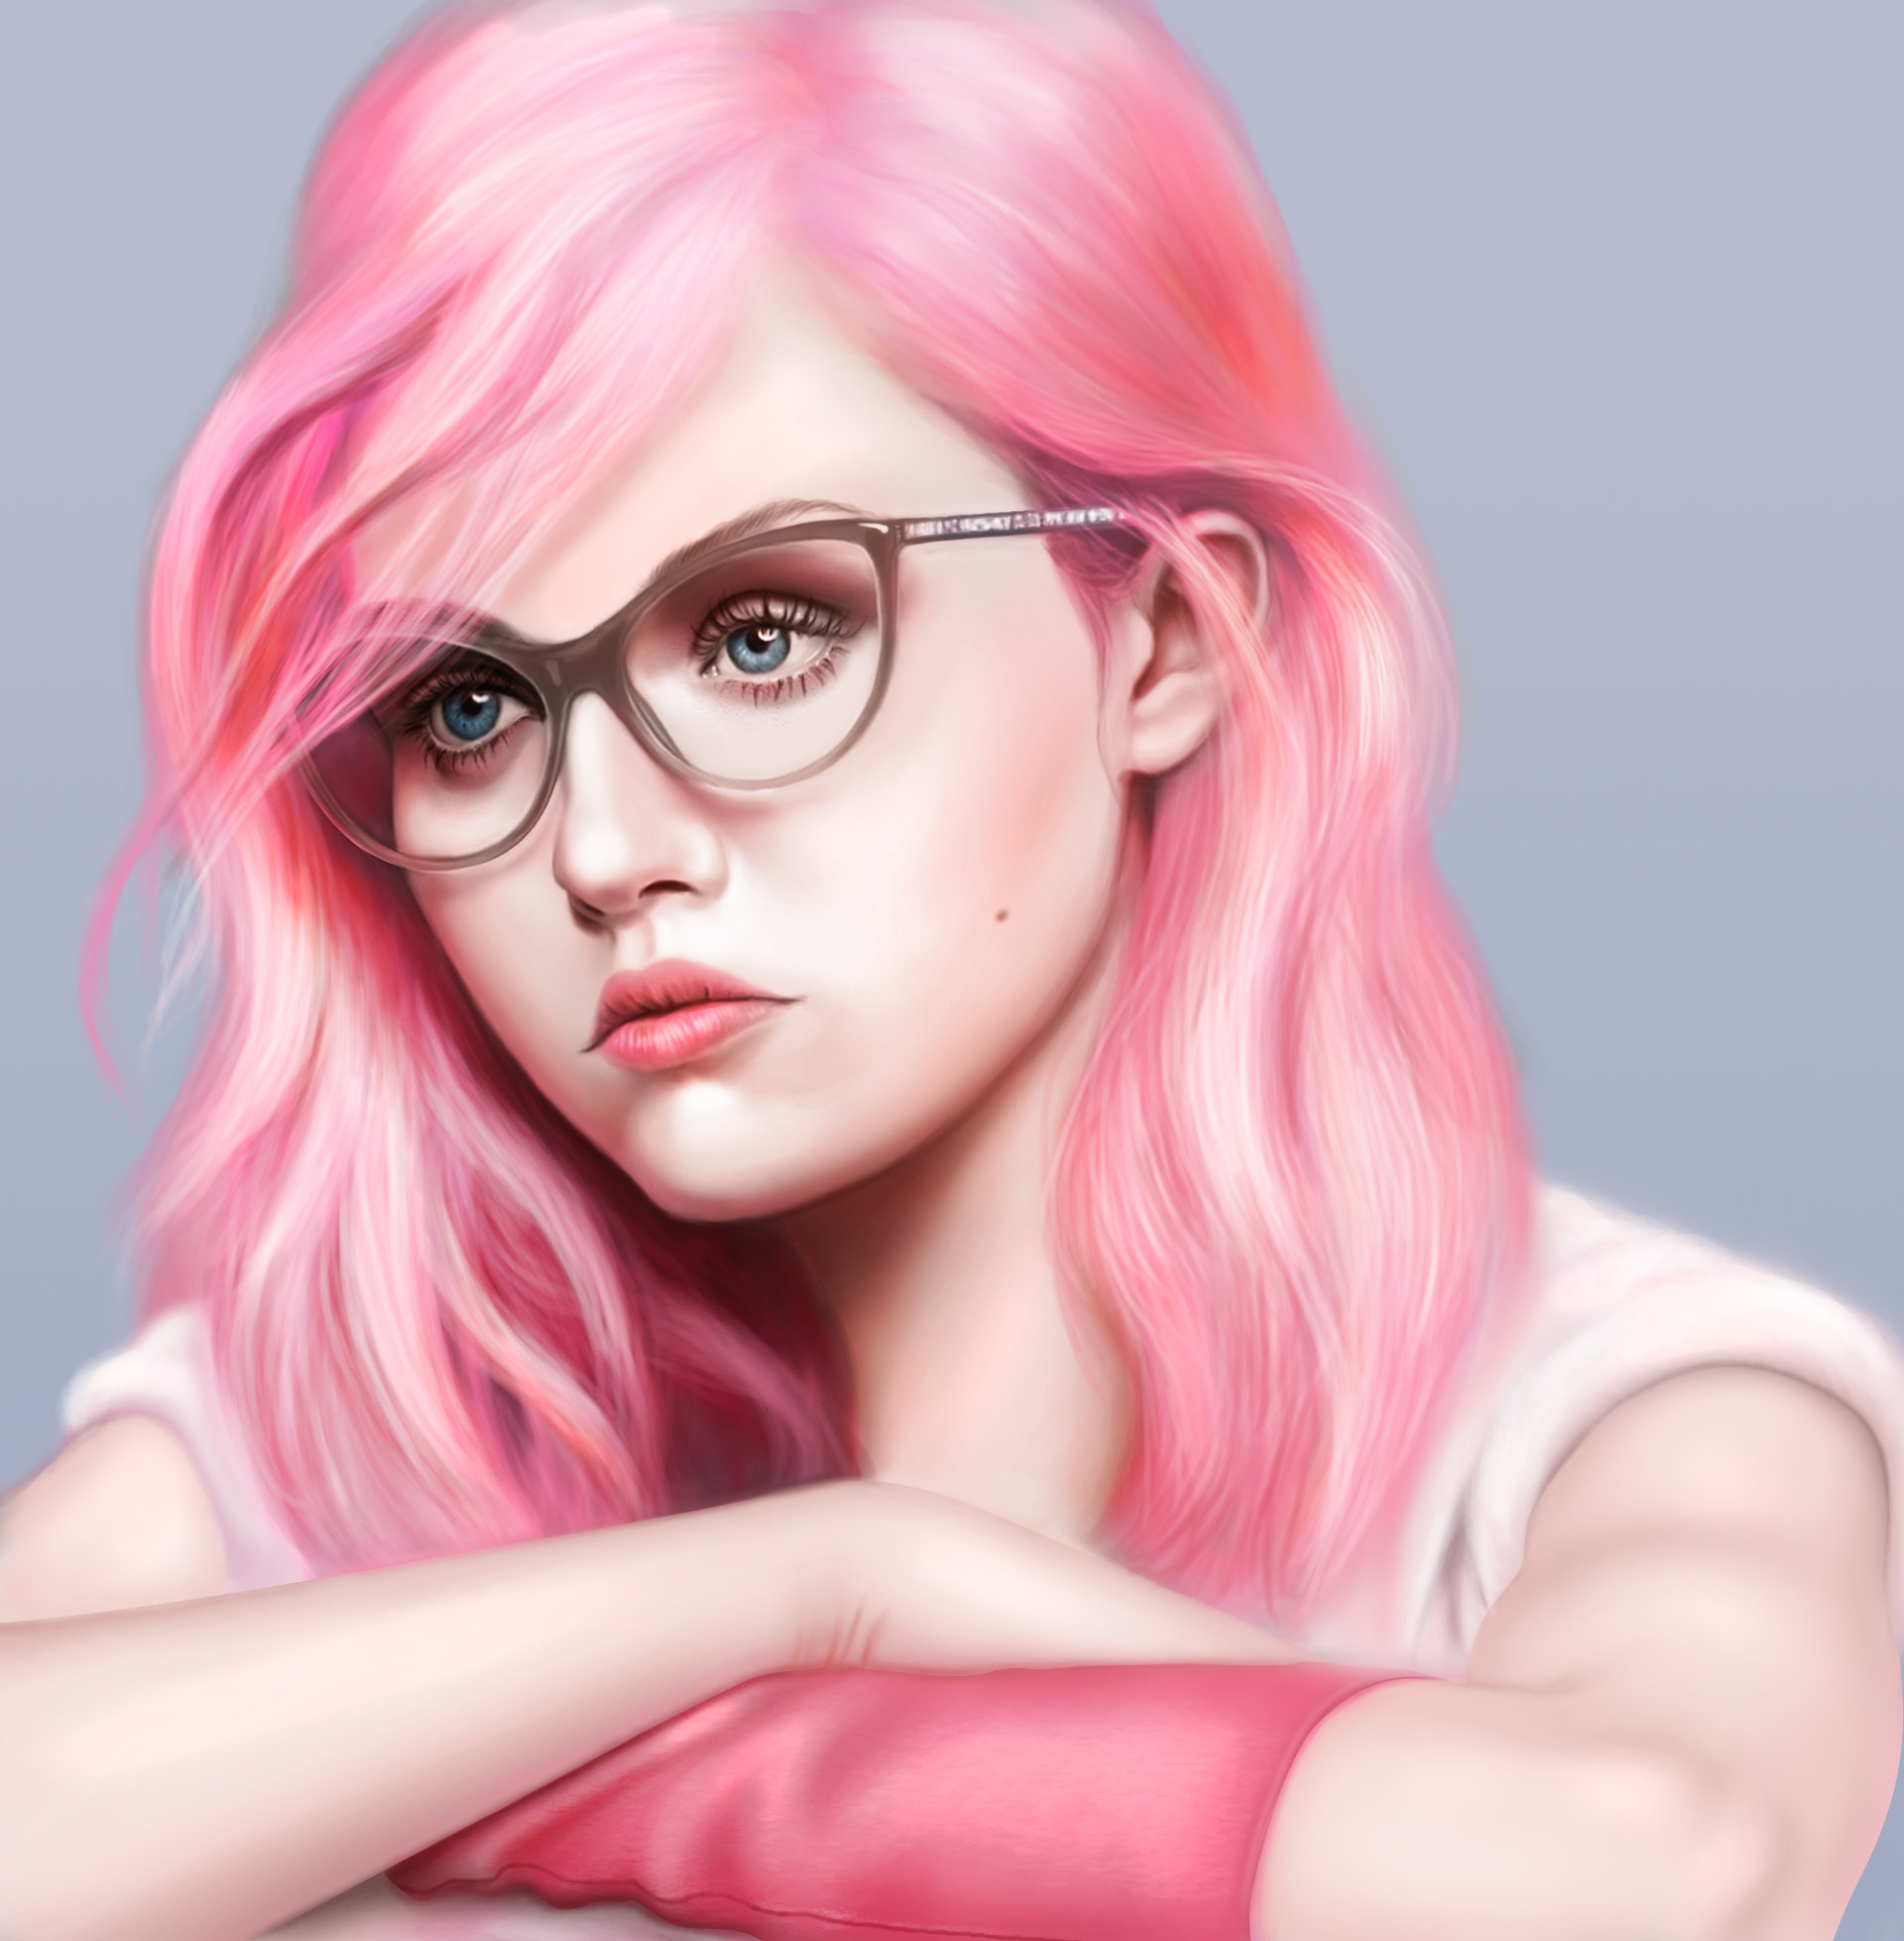 Artstation - Portrait Study -Pink Girl-, Marina Armu-6868